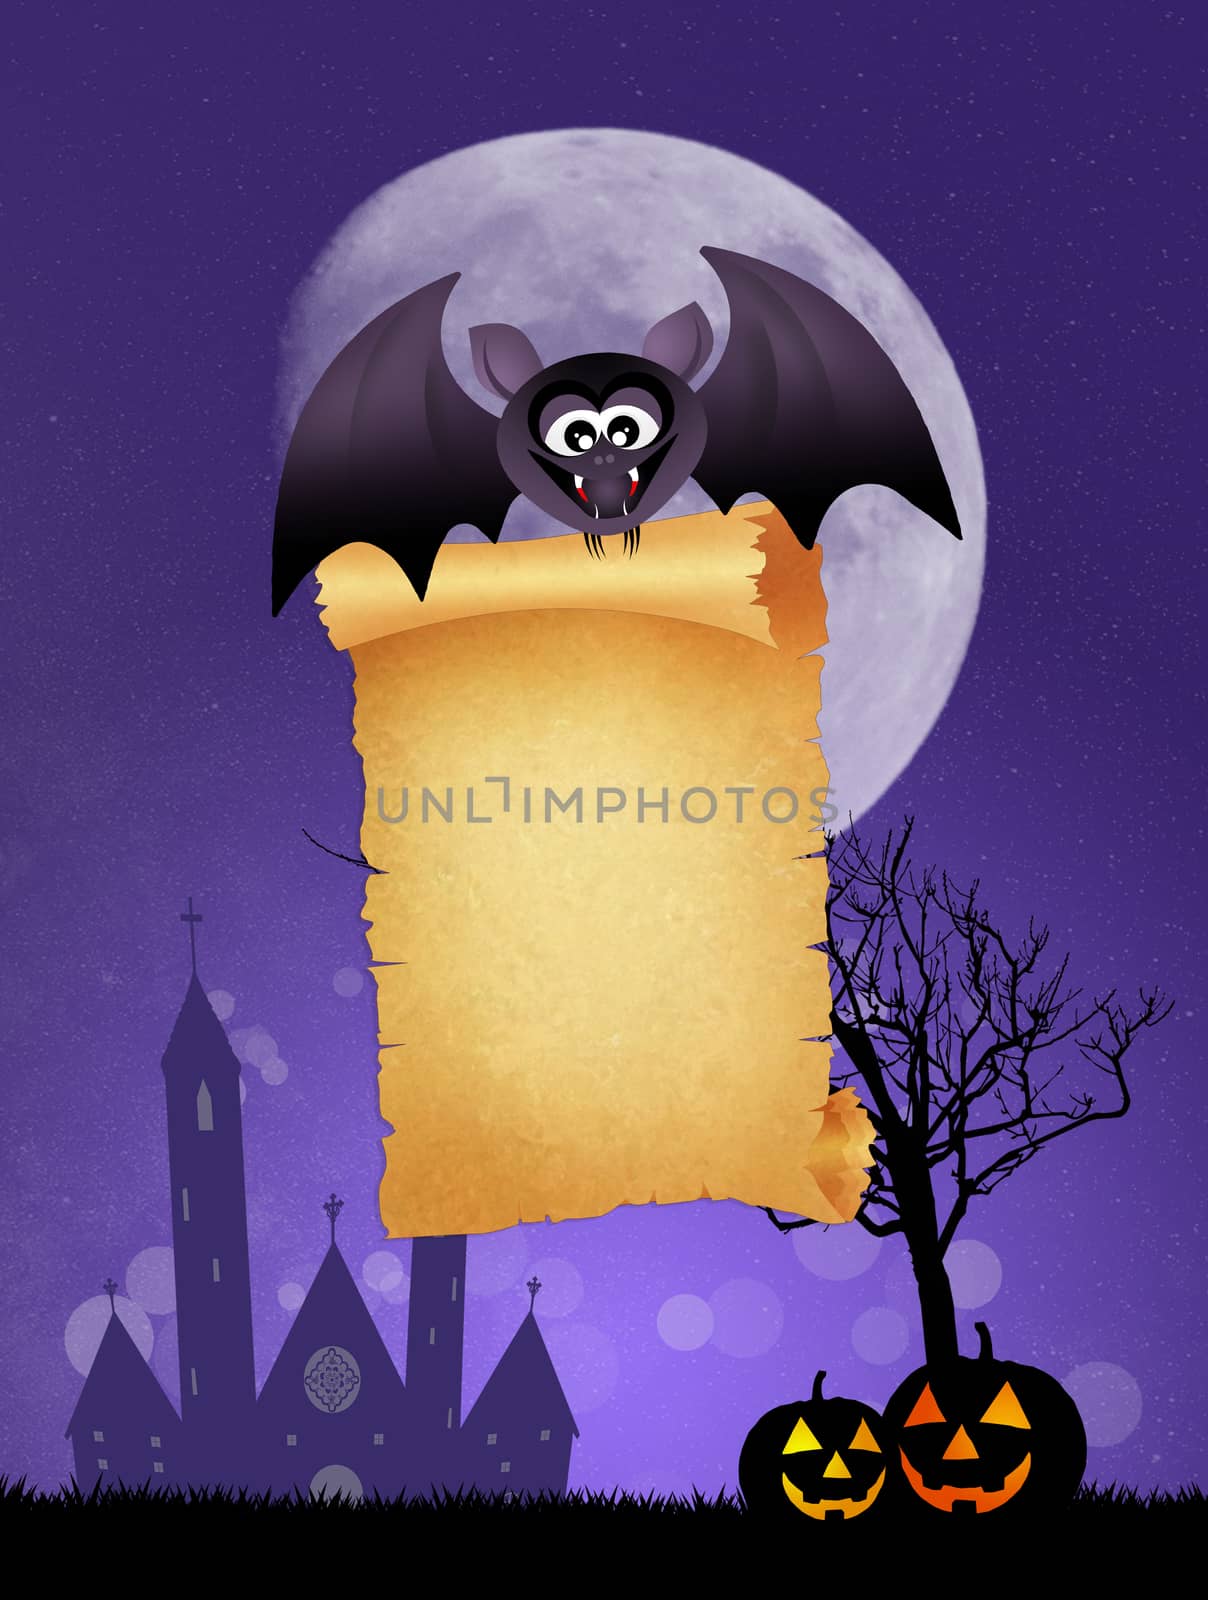 illustration of bat with parchment